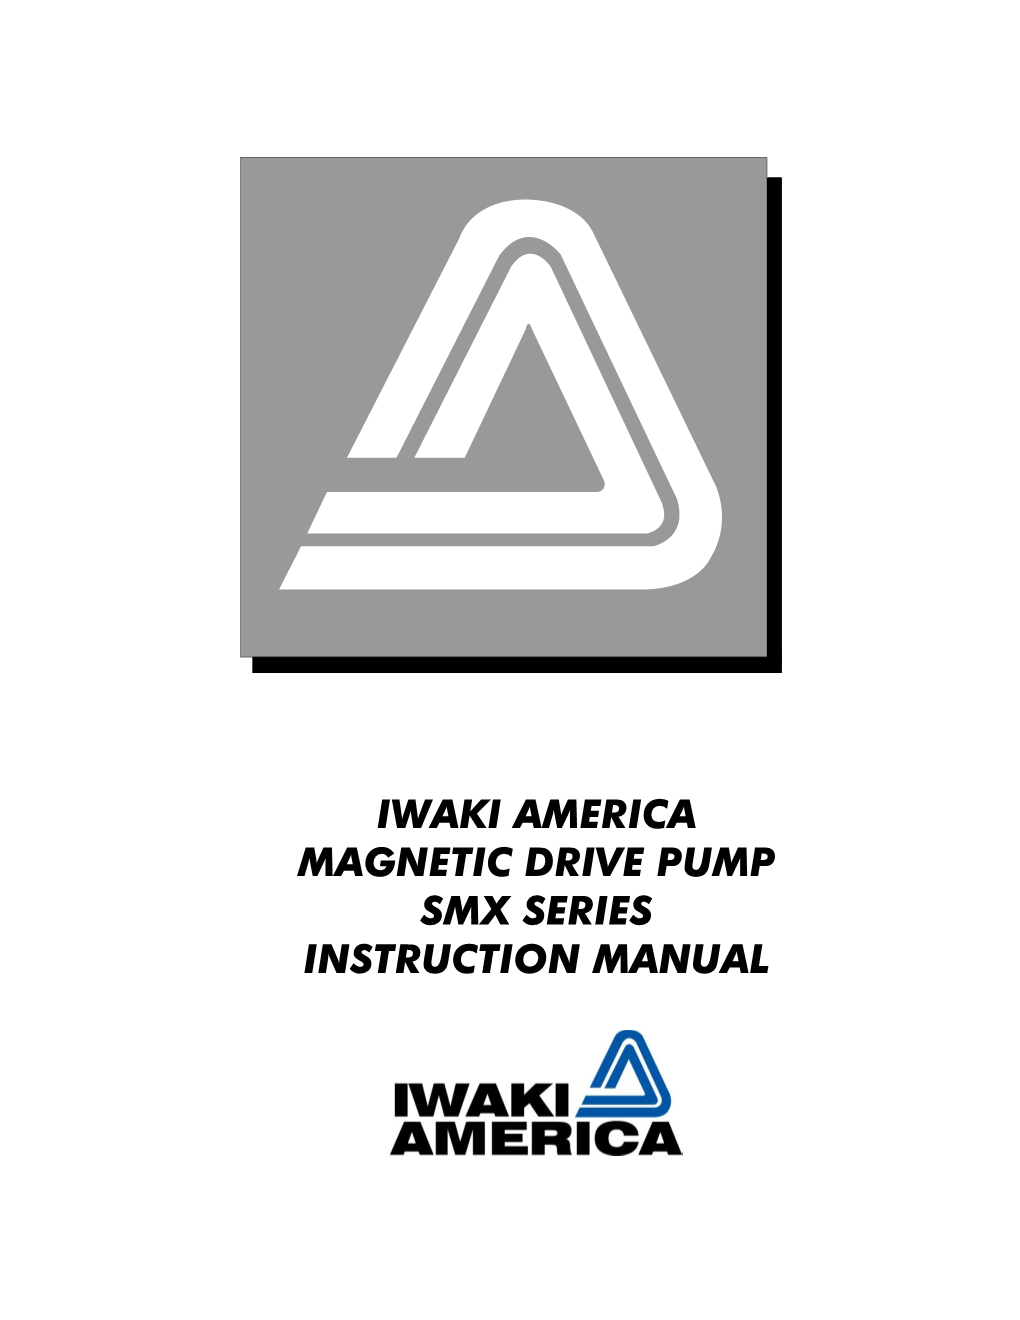 Iwaki America Magnetic Drive Pump Smx Series Instruction Manual